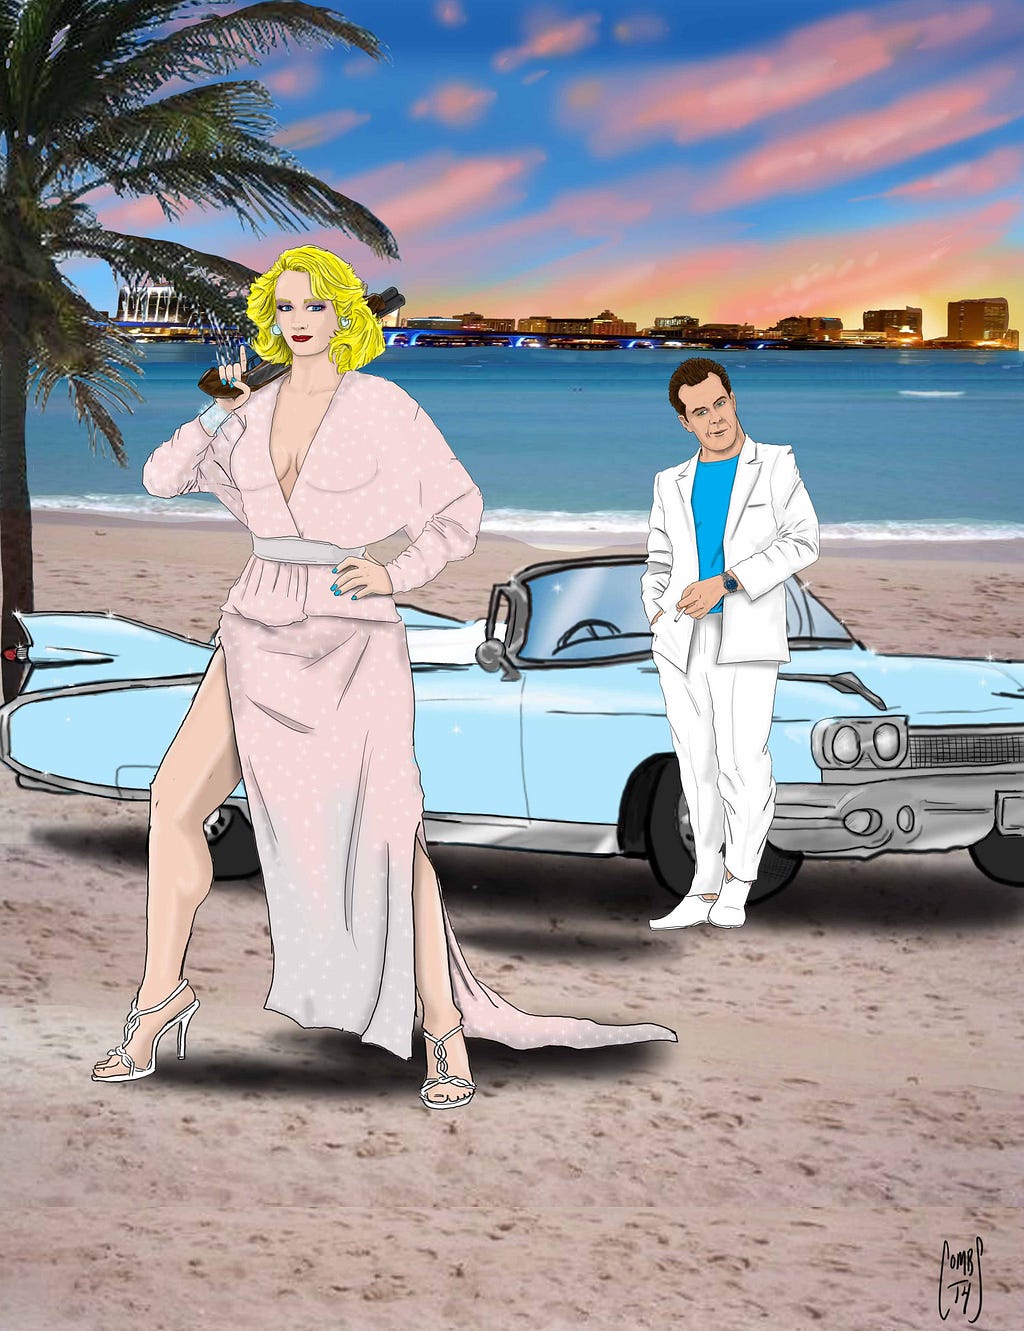 Moonlighting in Miami — starring Cybill Shepherd and Bruce Willis